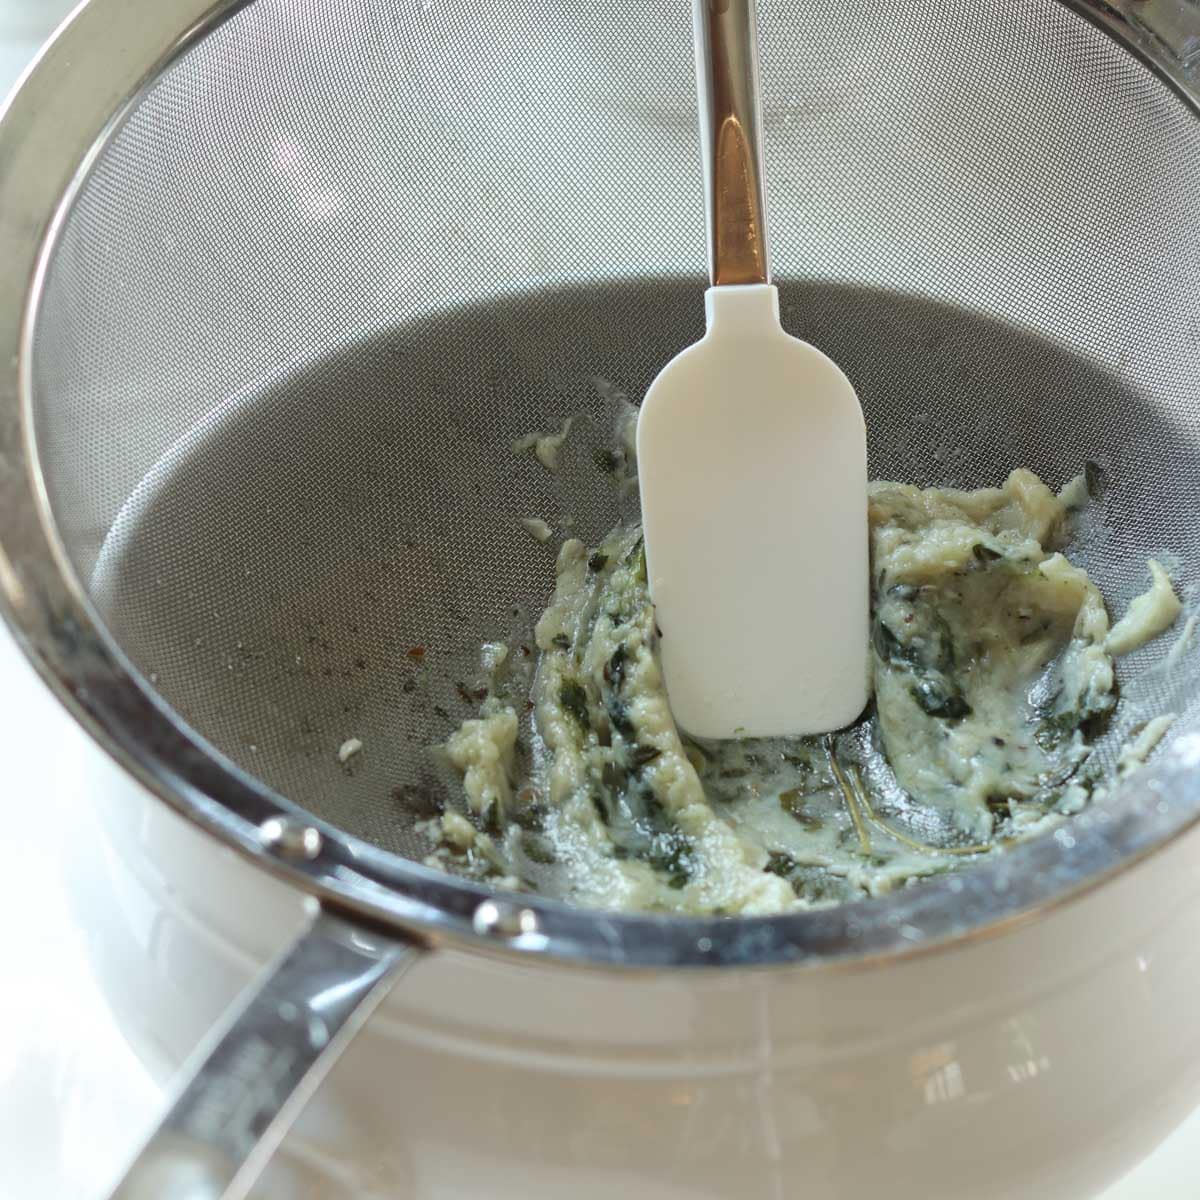 creating a garlic puree by pressing the garlic through the mesh sieve